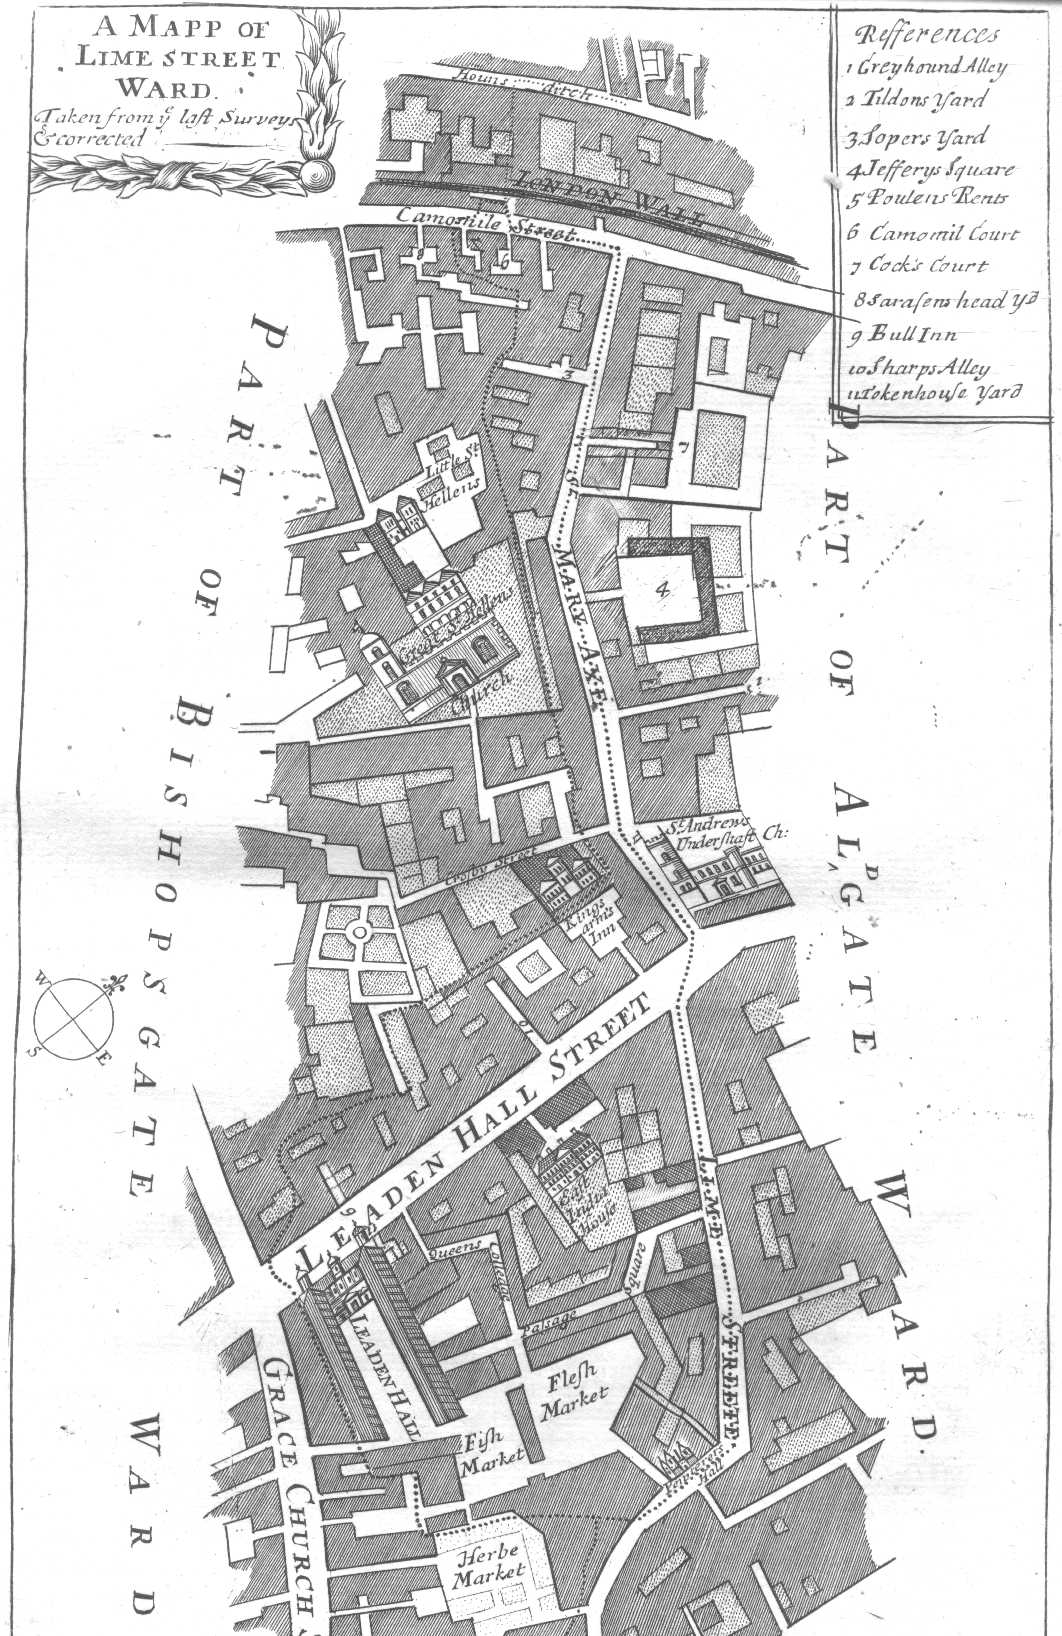 Map of Limestreet Ward, London, 18th Century